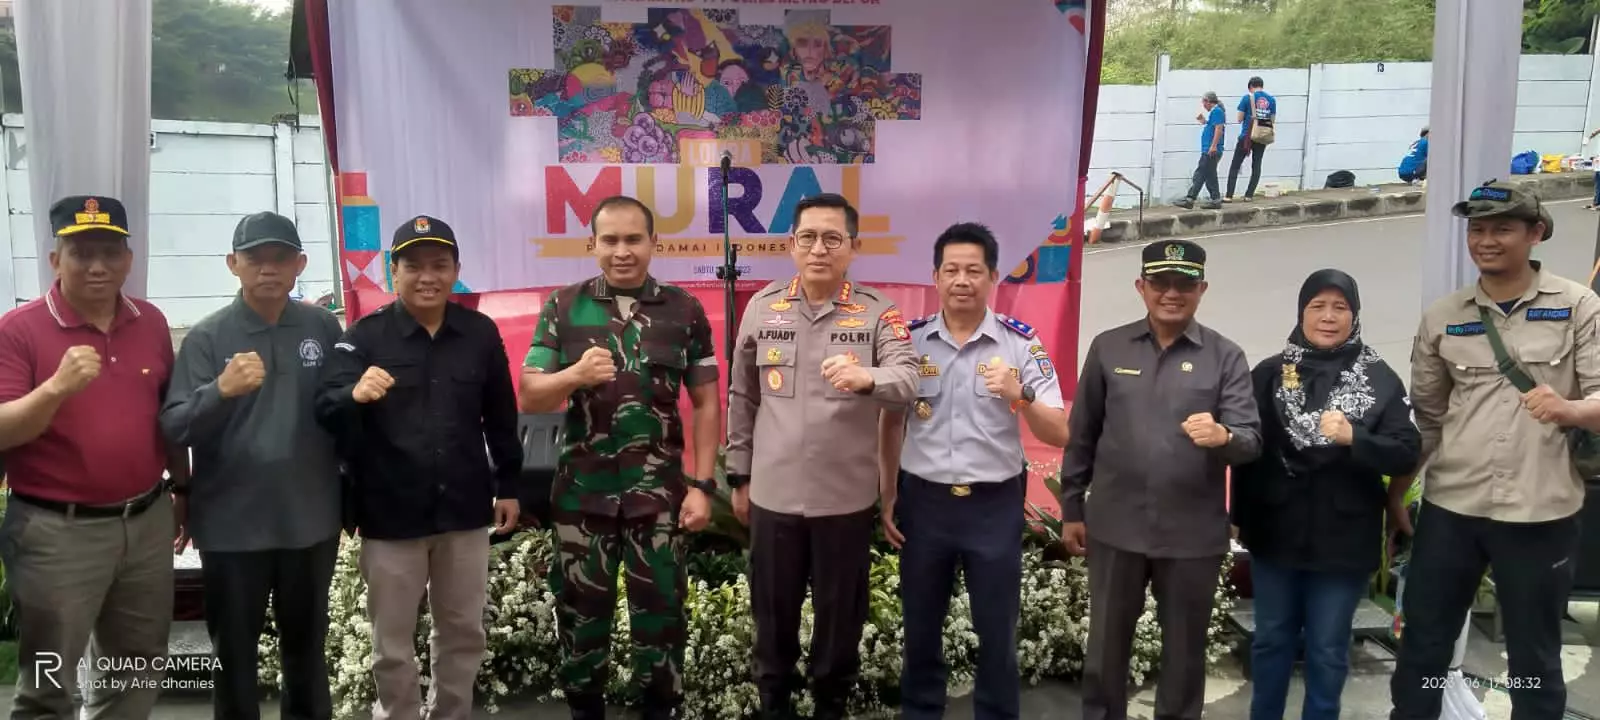 Polres Metro Depok Gelar Lomba Mural, Meriahkan HUT Bhayangkara ke-77